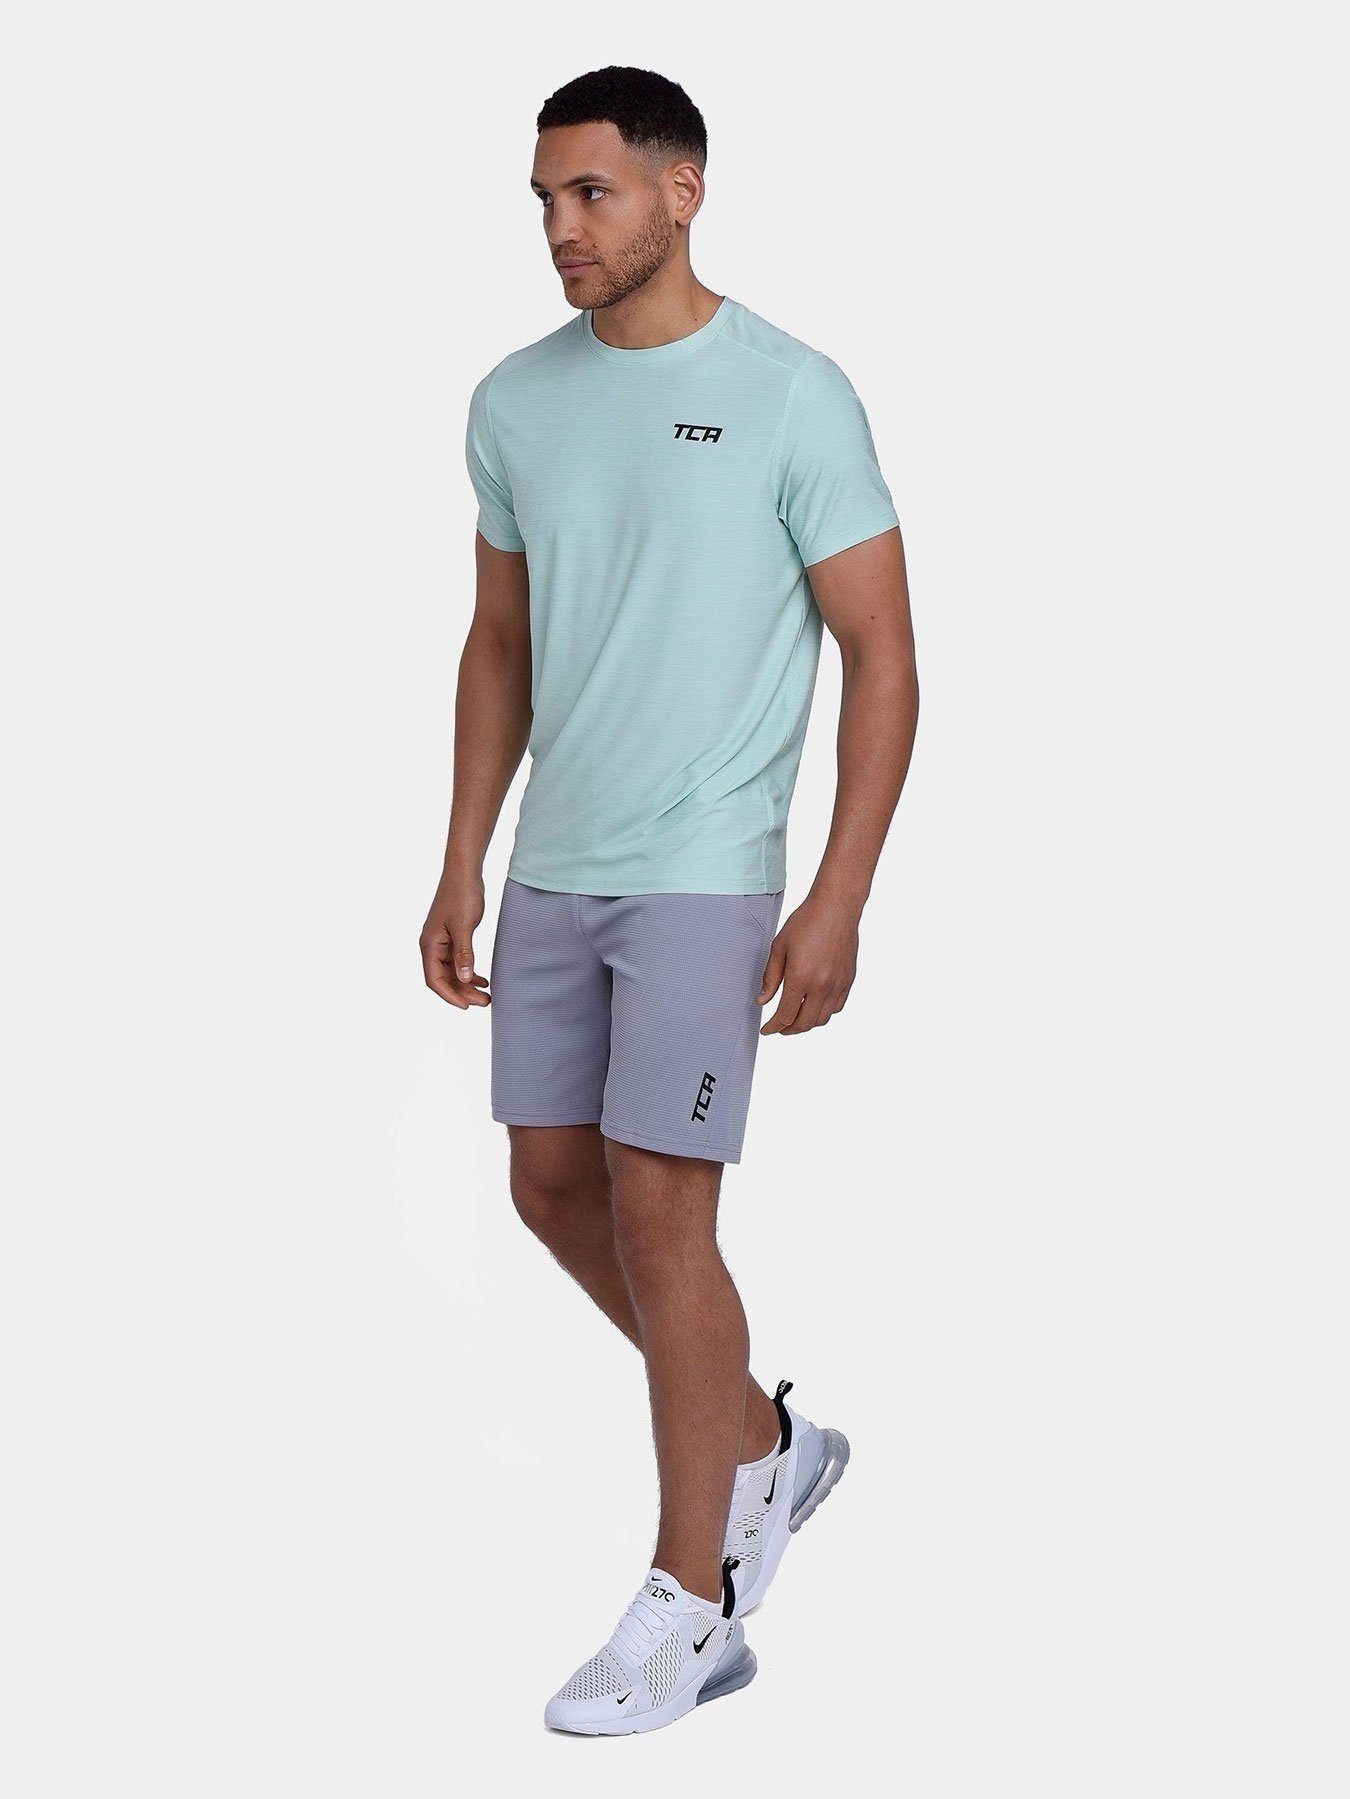 Galaxy 2.0 Gym T-Shirt for Men